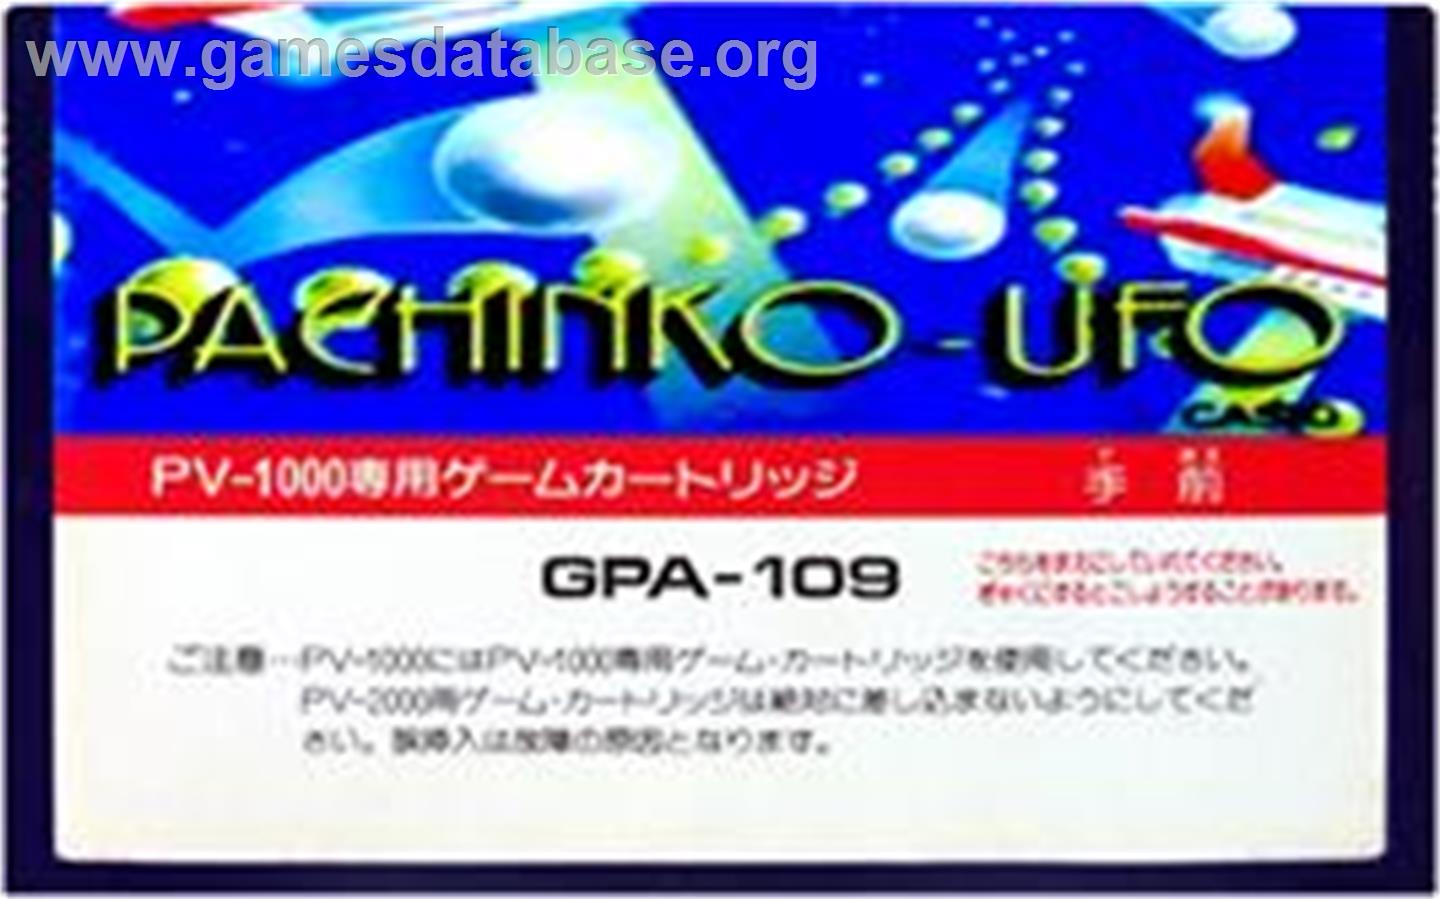 Pachinko-UFO - Casio PV-1000 - Artwork - Cartridge Top